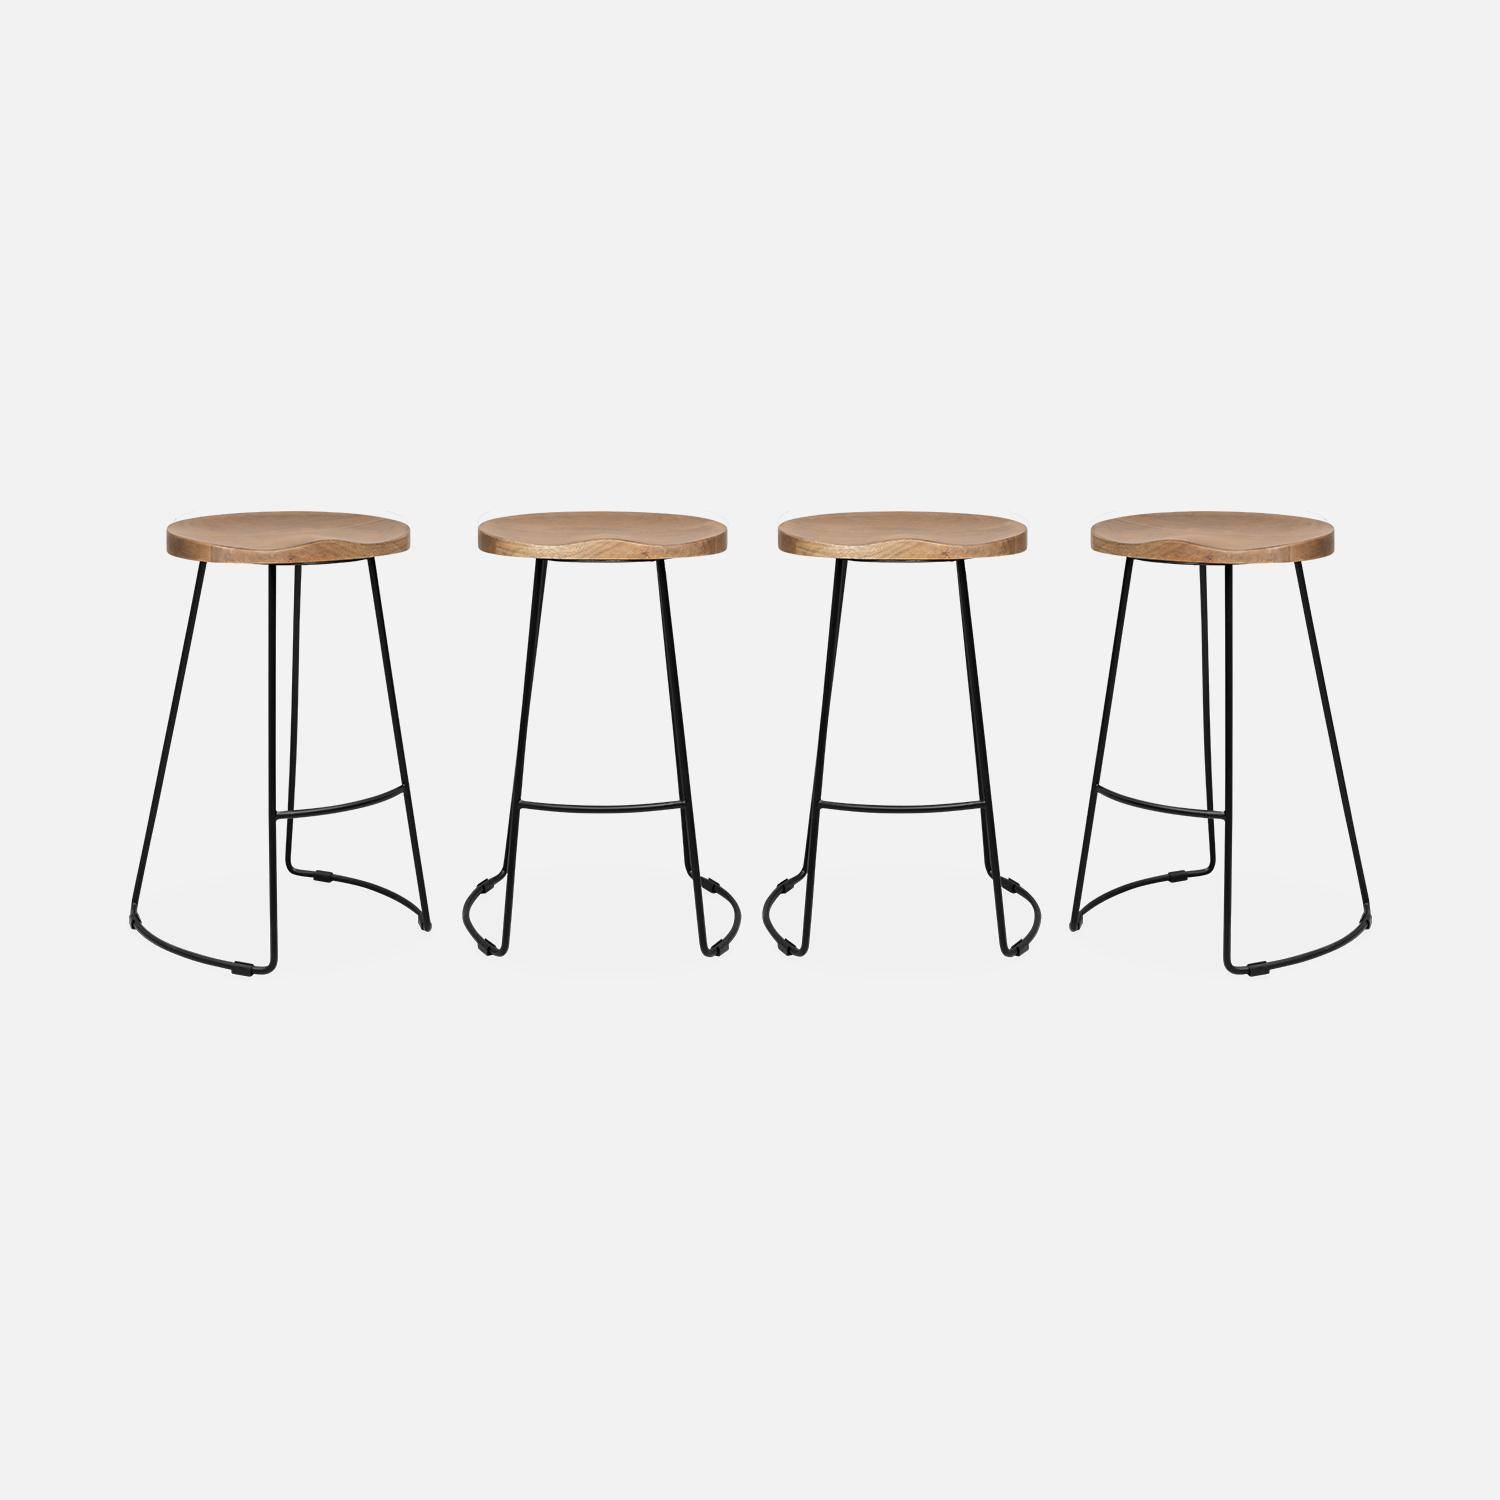 Set of 4 industrial metal and wooden bar stools, 44x36x65cm, Jaya, Mango wood seat, black metal legs,sweeek,Photo3